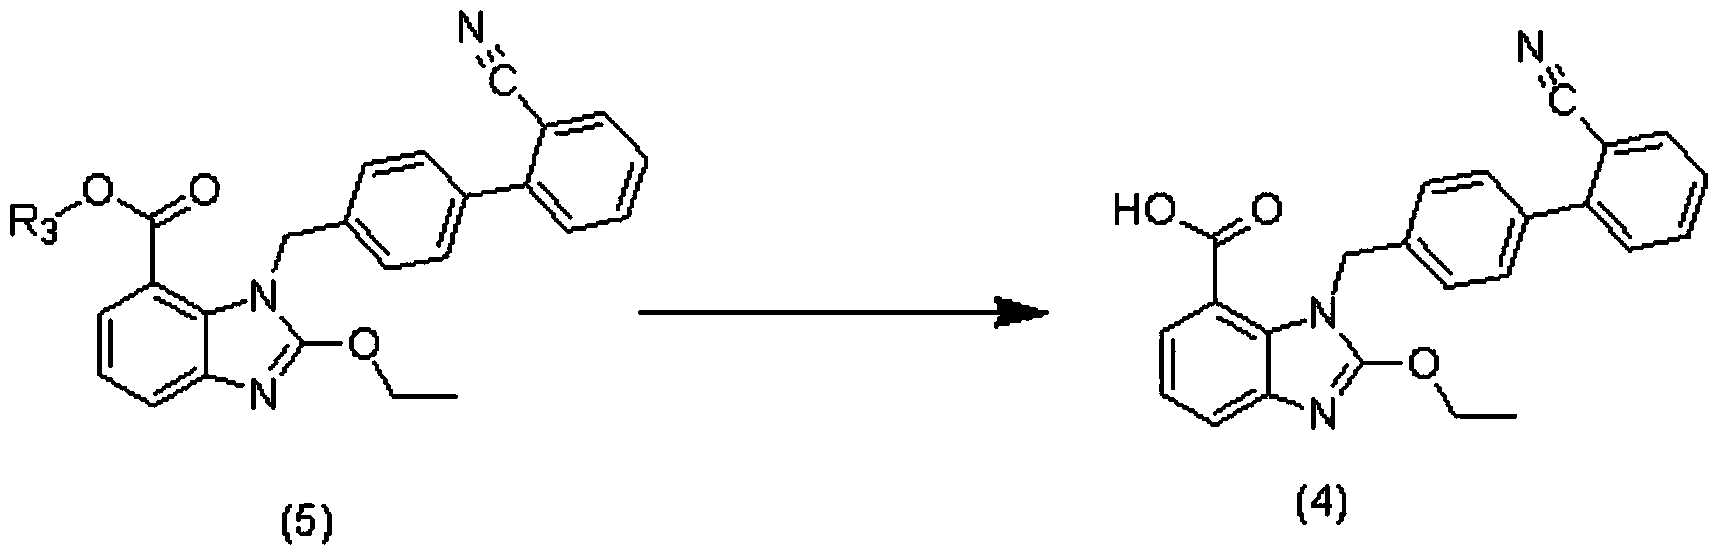 Synthesis method for azilsartan medoxomil or salt thereof, intermediate of azilsartan medoxomil or salt thereof and synthesis method for intermediate